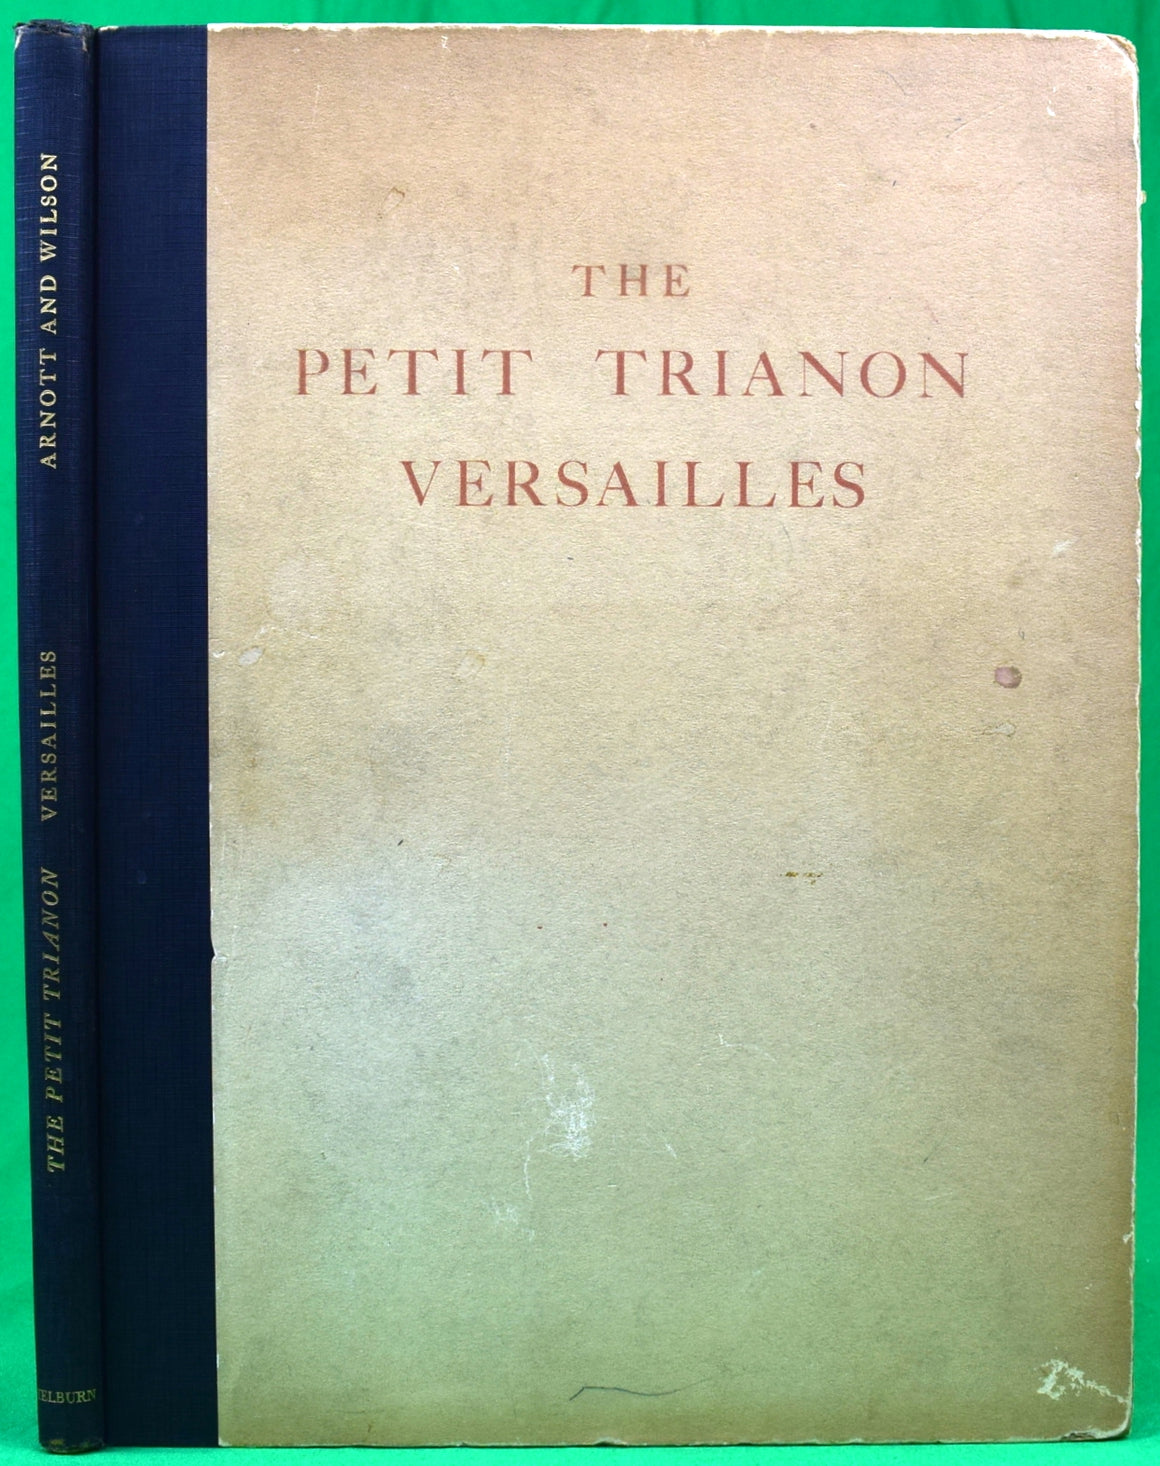 "The Petit Trianon Versailles" 1929 ARNOTT, James A. and WILSON, John